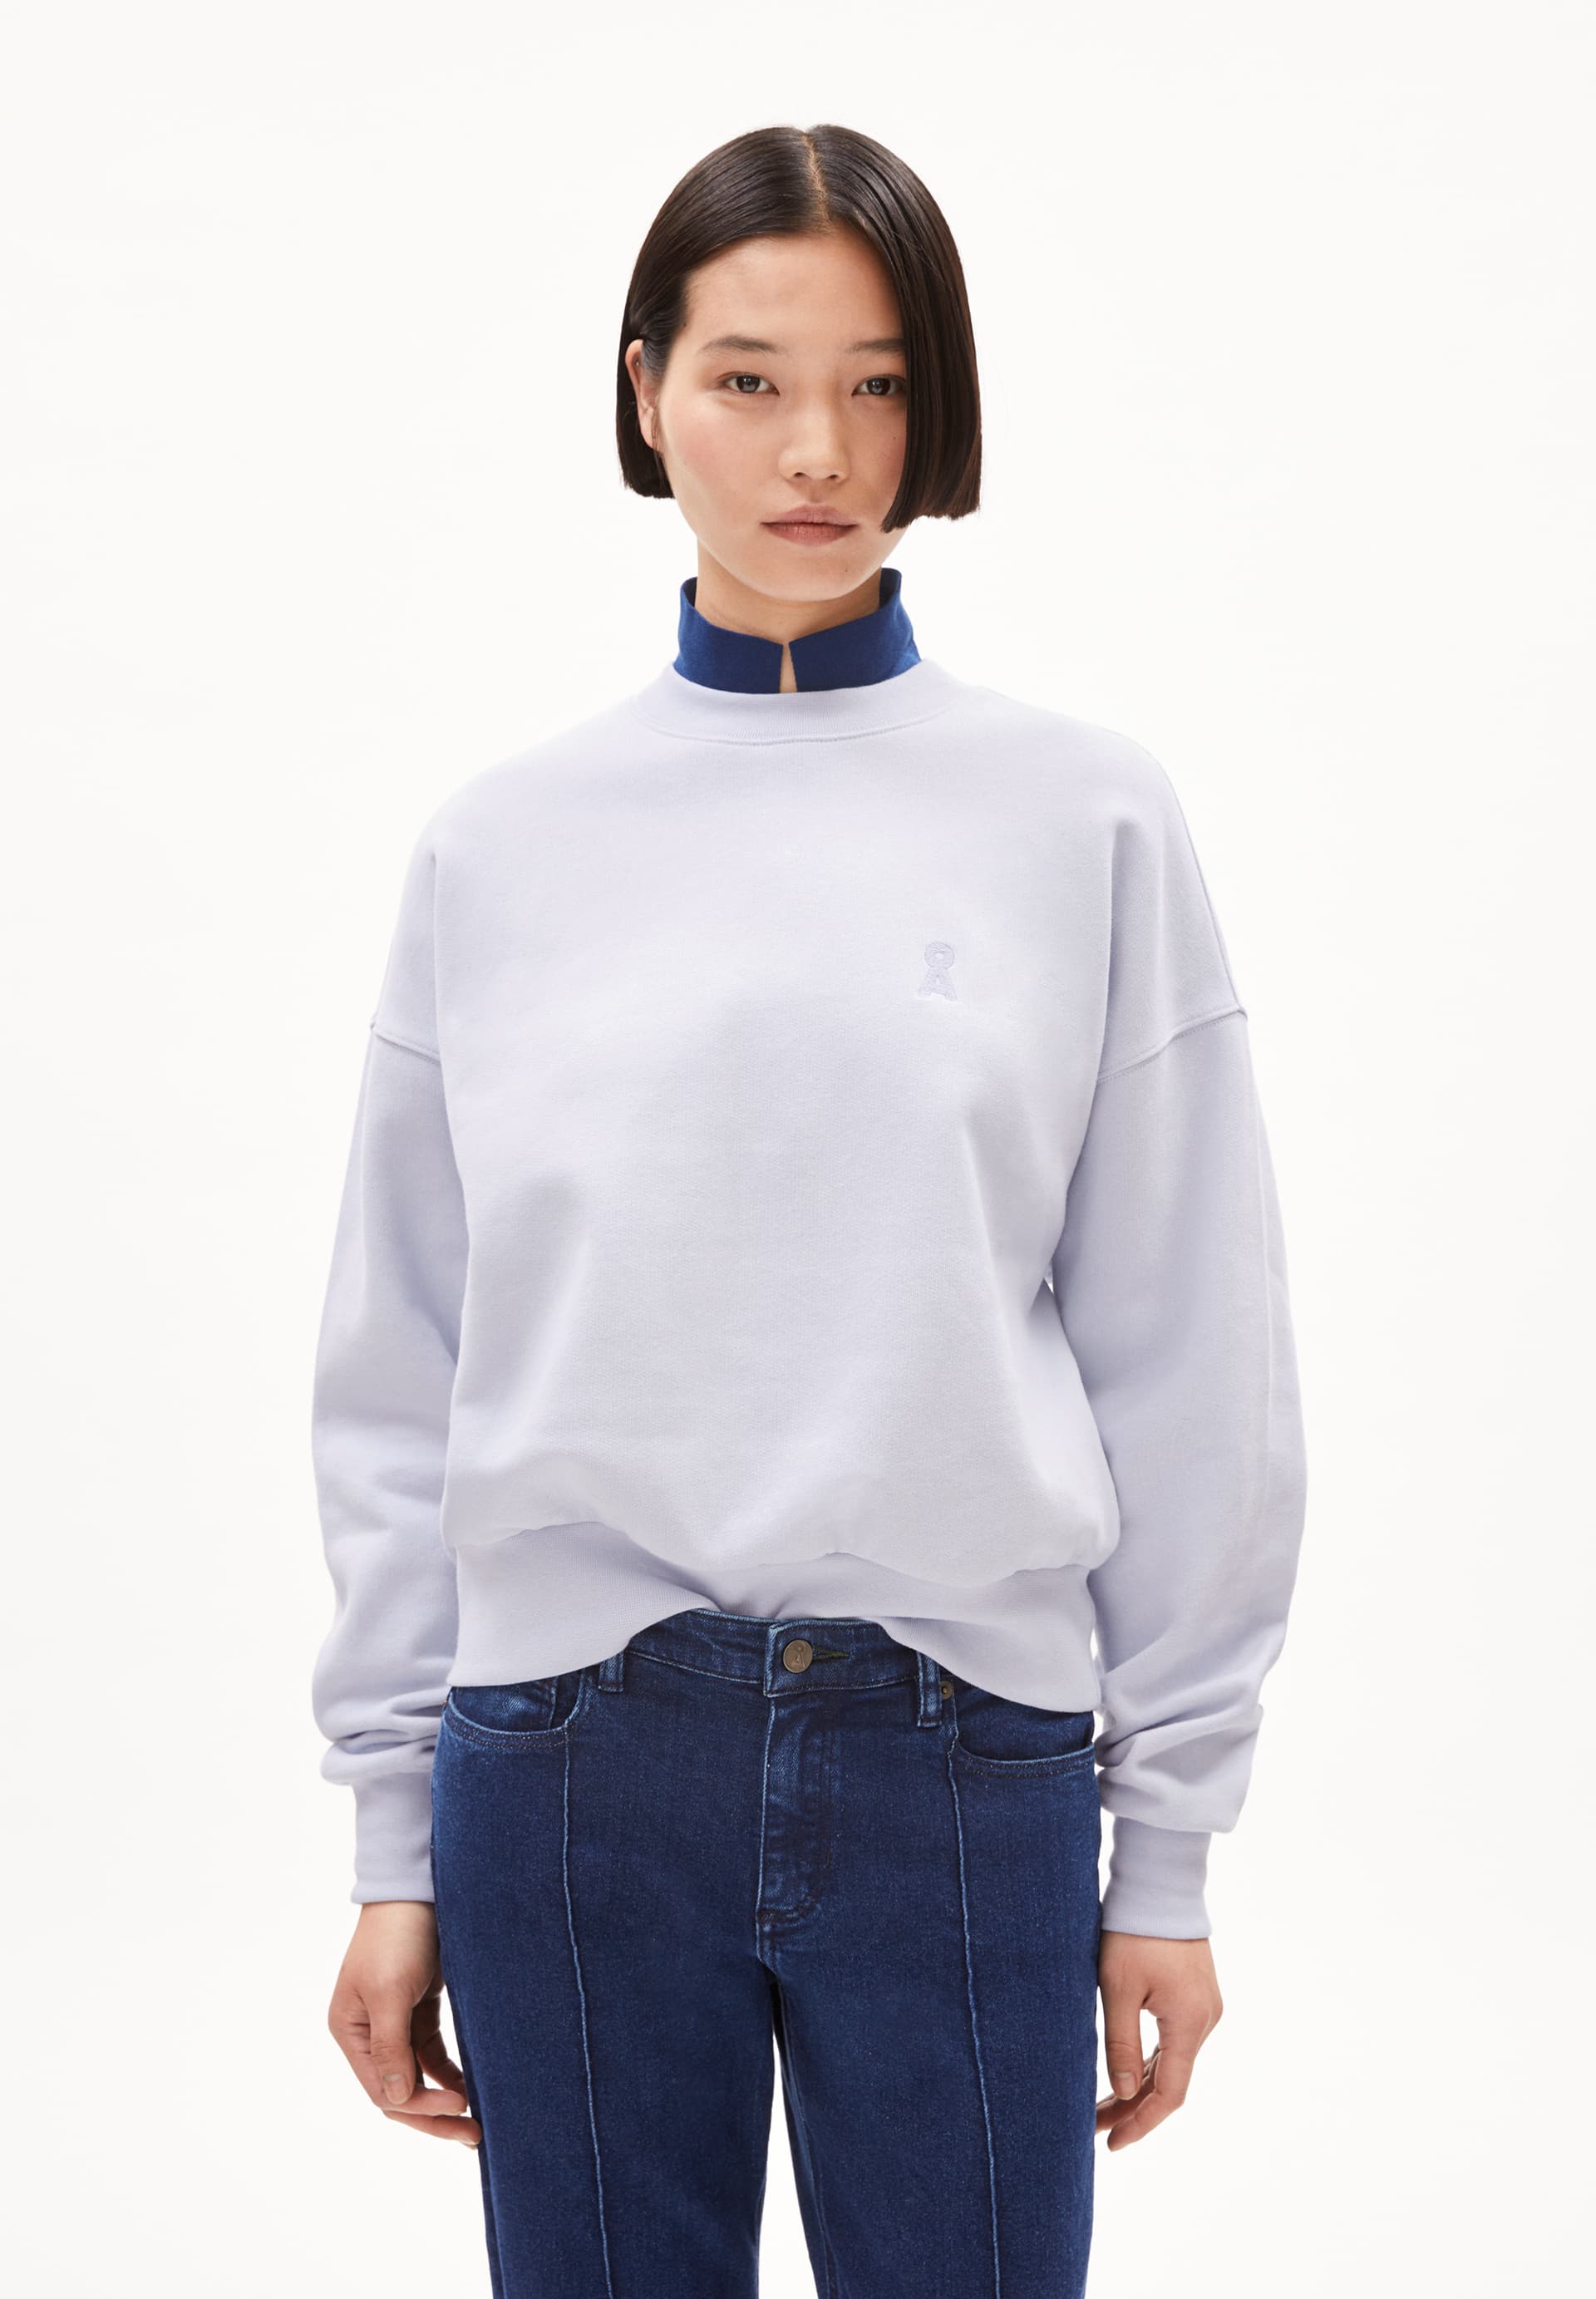 ALIZAA Sweatshirt Oversized Fit made of Organic Cotton